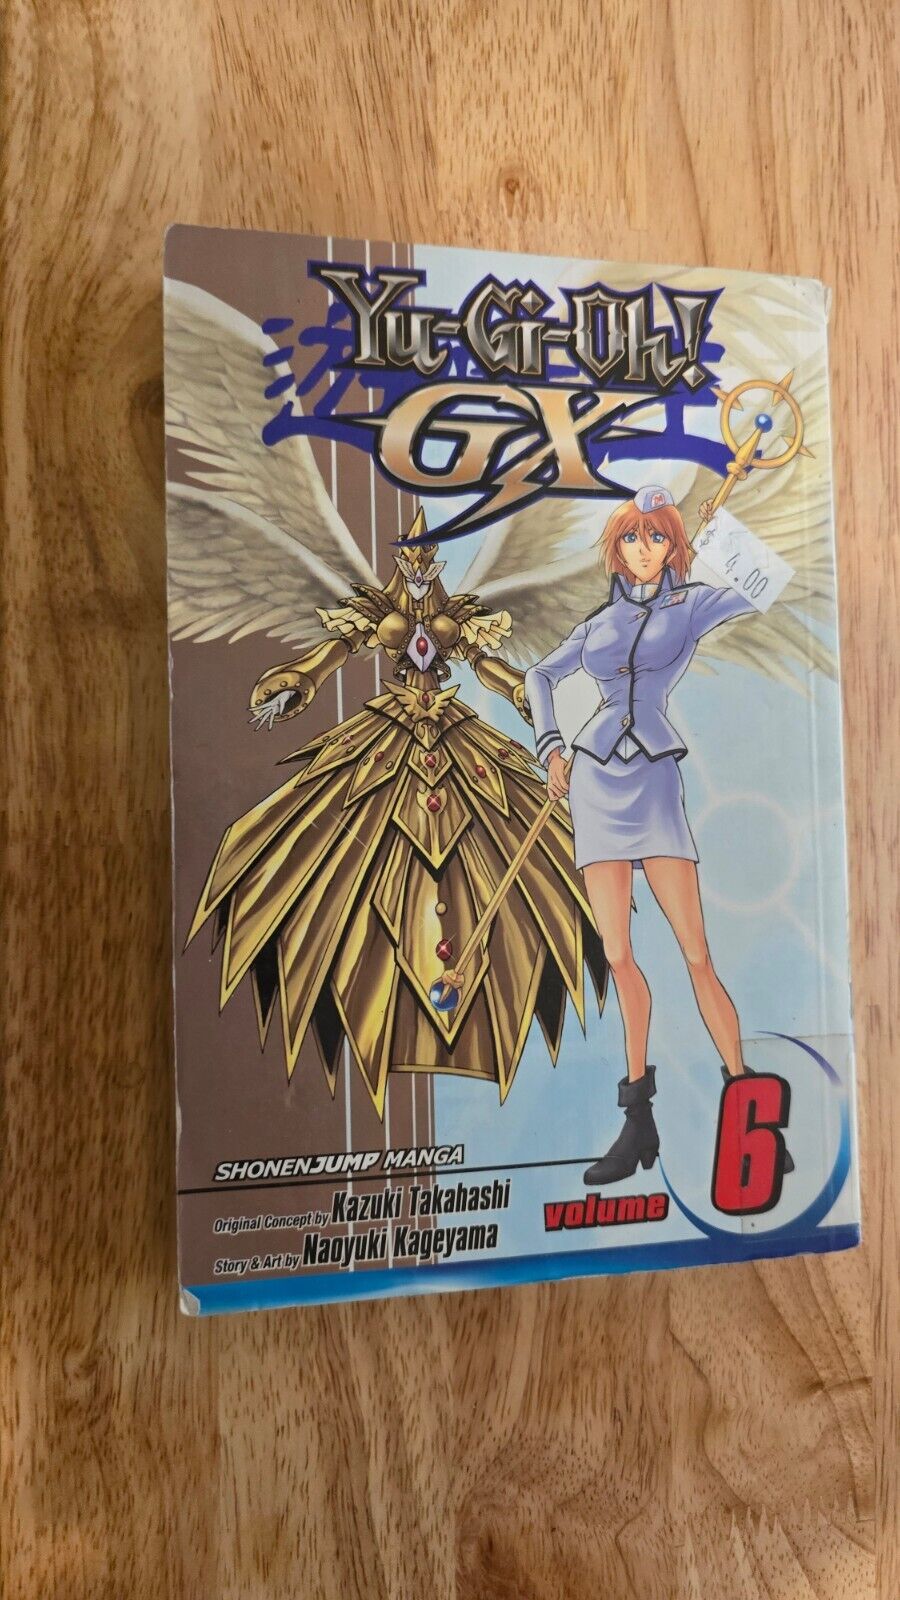 Yu-Gi-Oh YuGiOh GX Volume 6 Manga English Vol no card inside